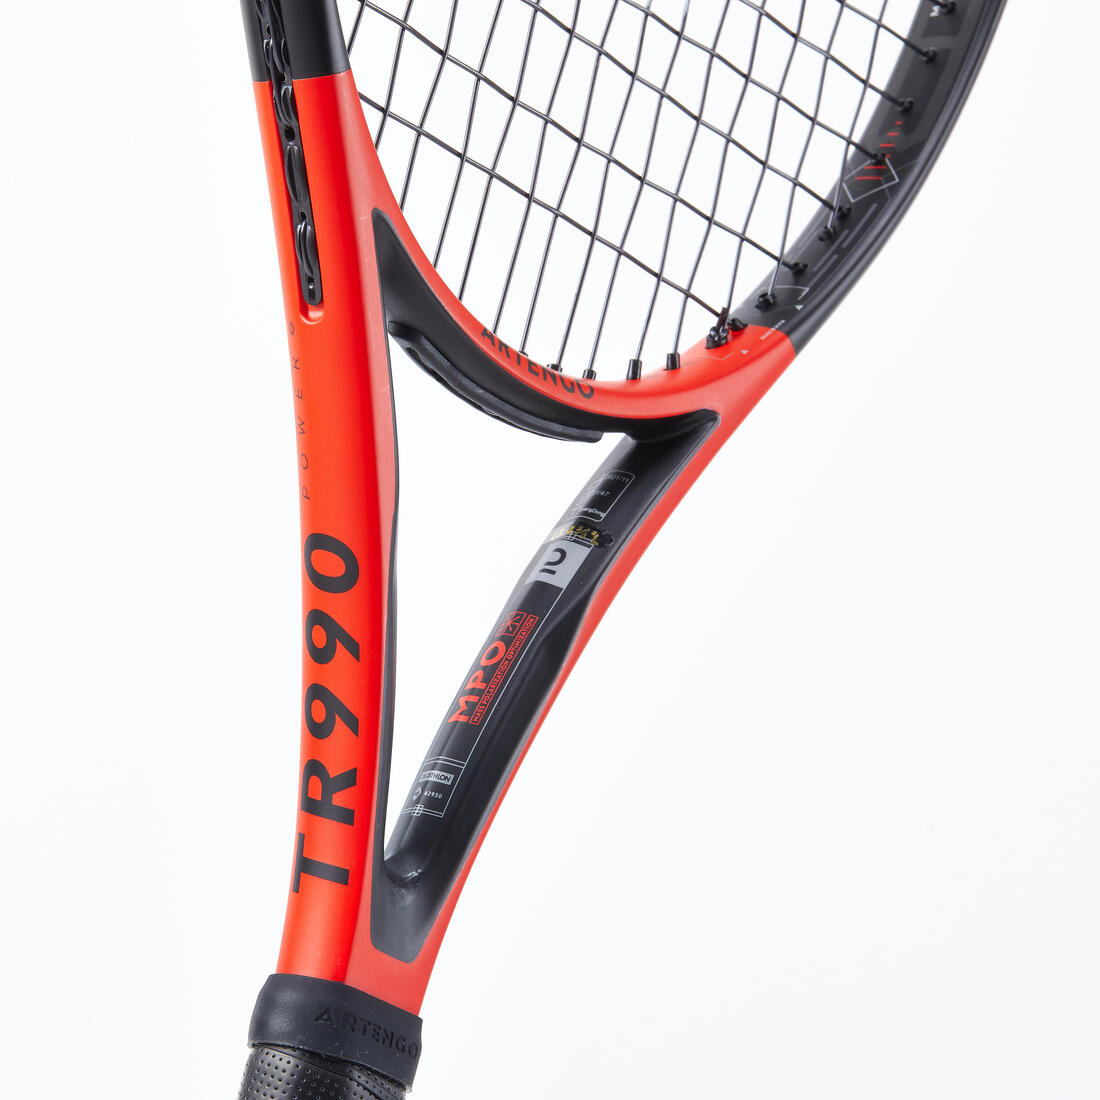 ARTENGO(アルテンゴ) テニス ラケット 990 POWER